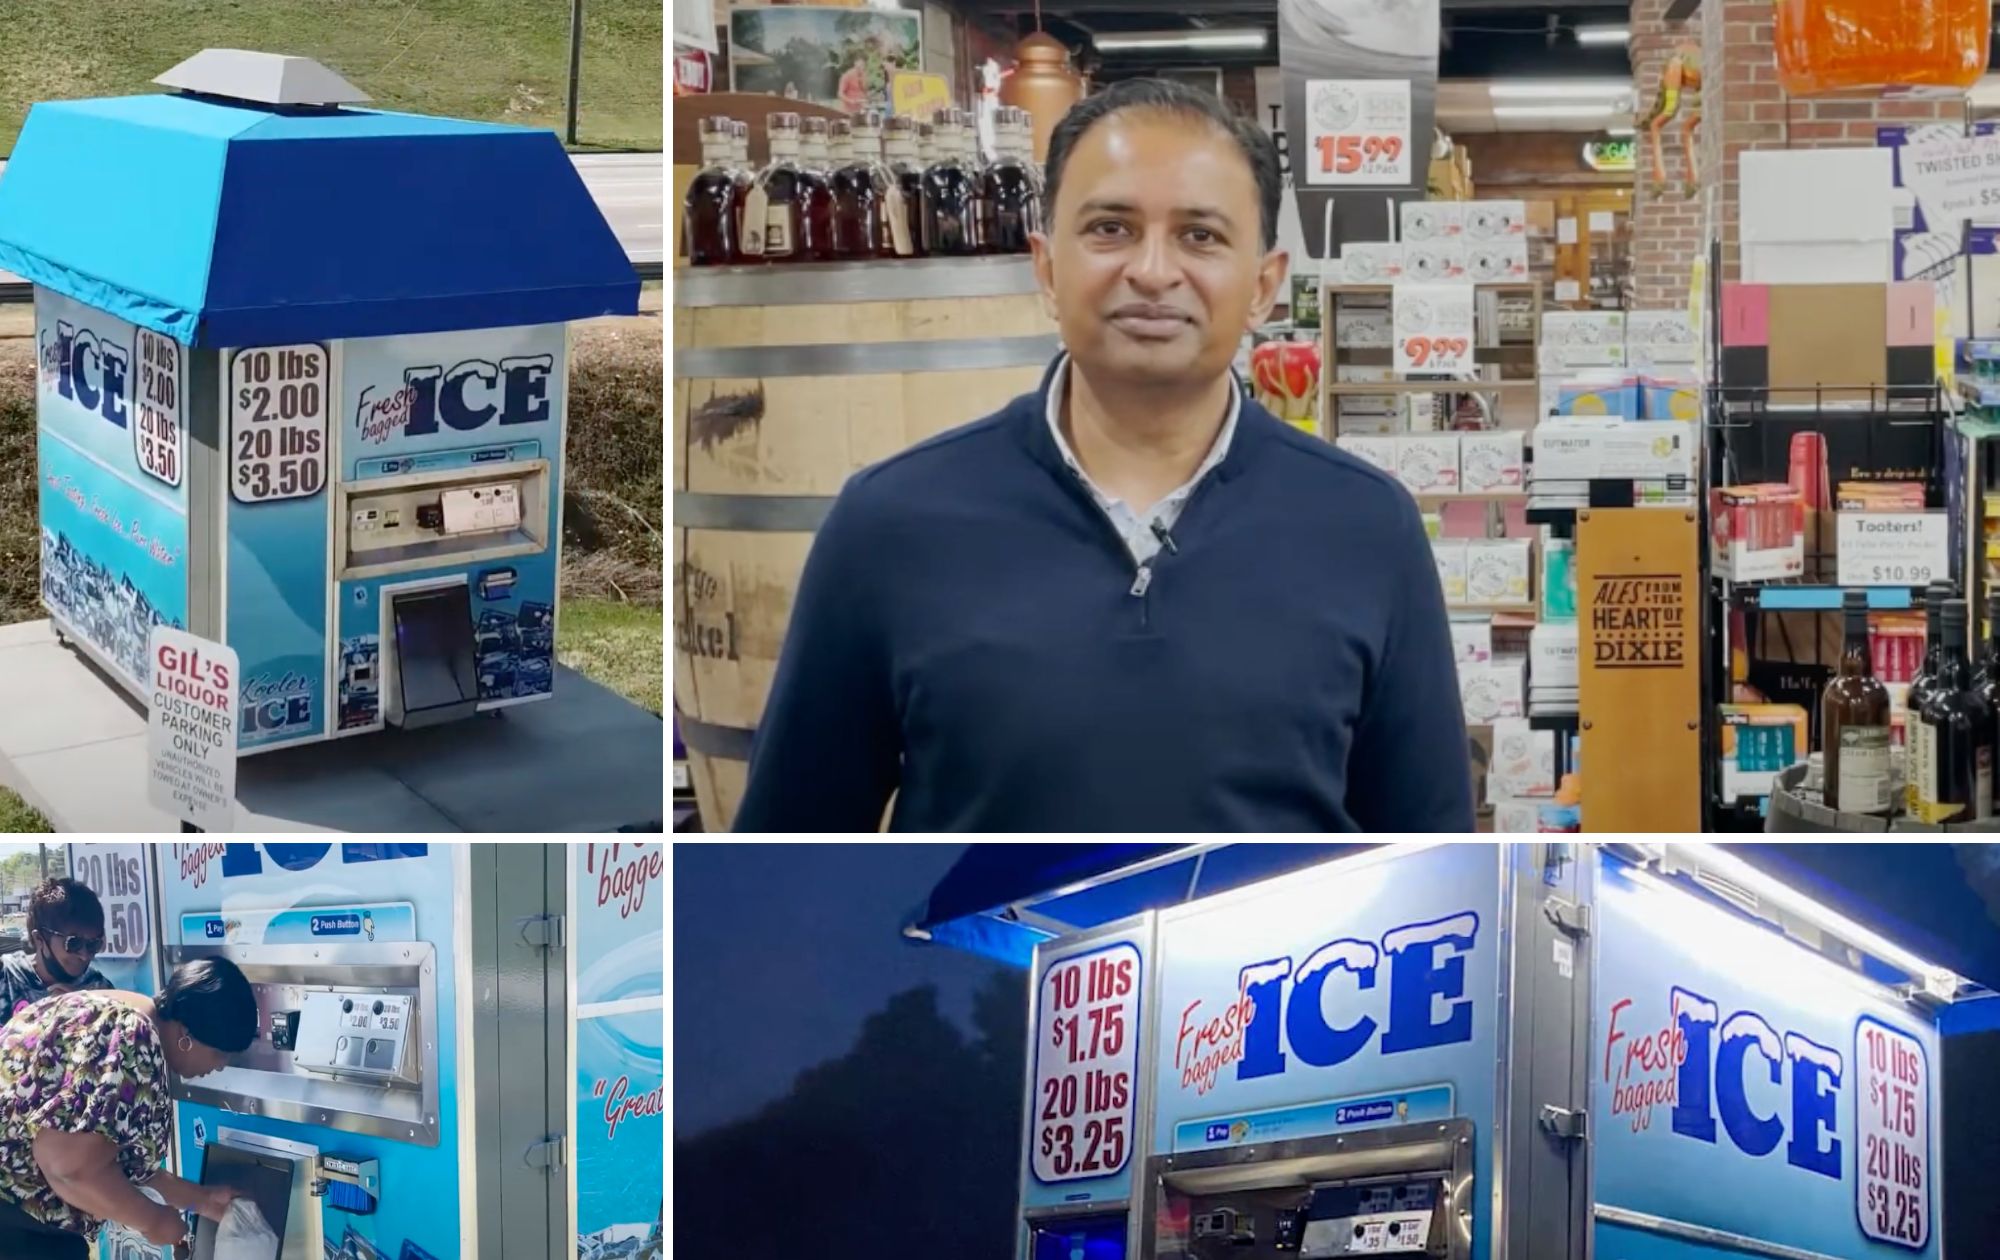 Kooler ice vending machines - ice vending machine business opportunity! - kooler ice vending machines is the leader in the ice vending machine business! Kooler ice manufactures & sells commercial ice vending machines. More...